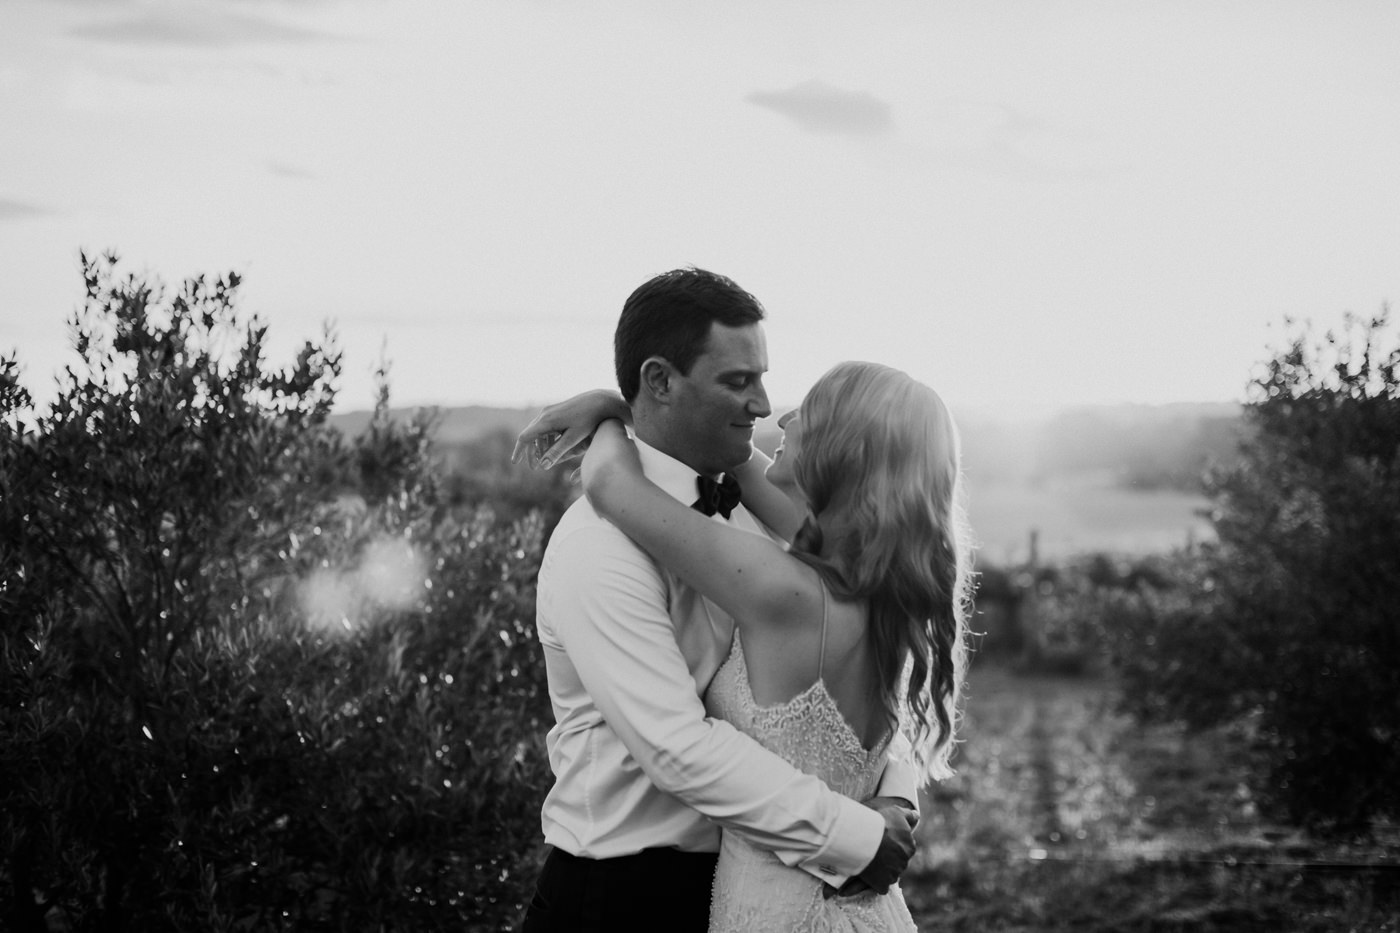 Anthony & Eliet - Wagga Wagga Wedding - Country NSW - Samantha Heather Photography-150.jpg